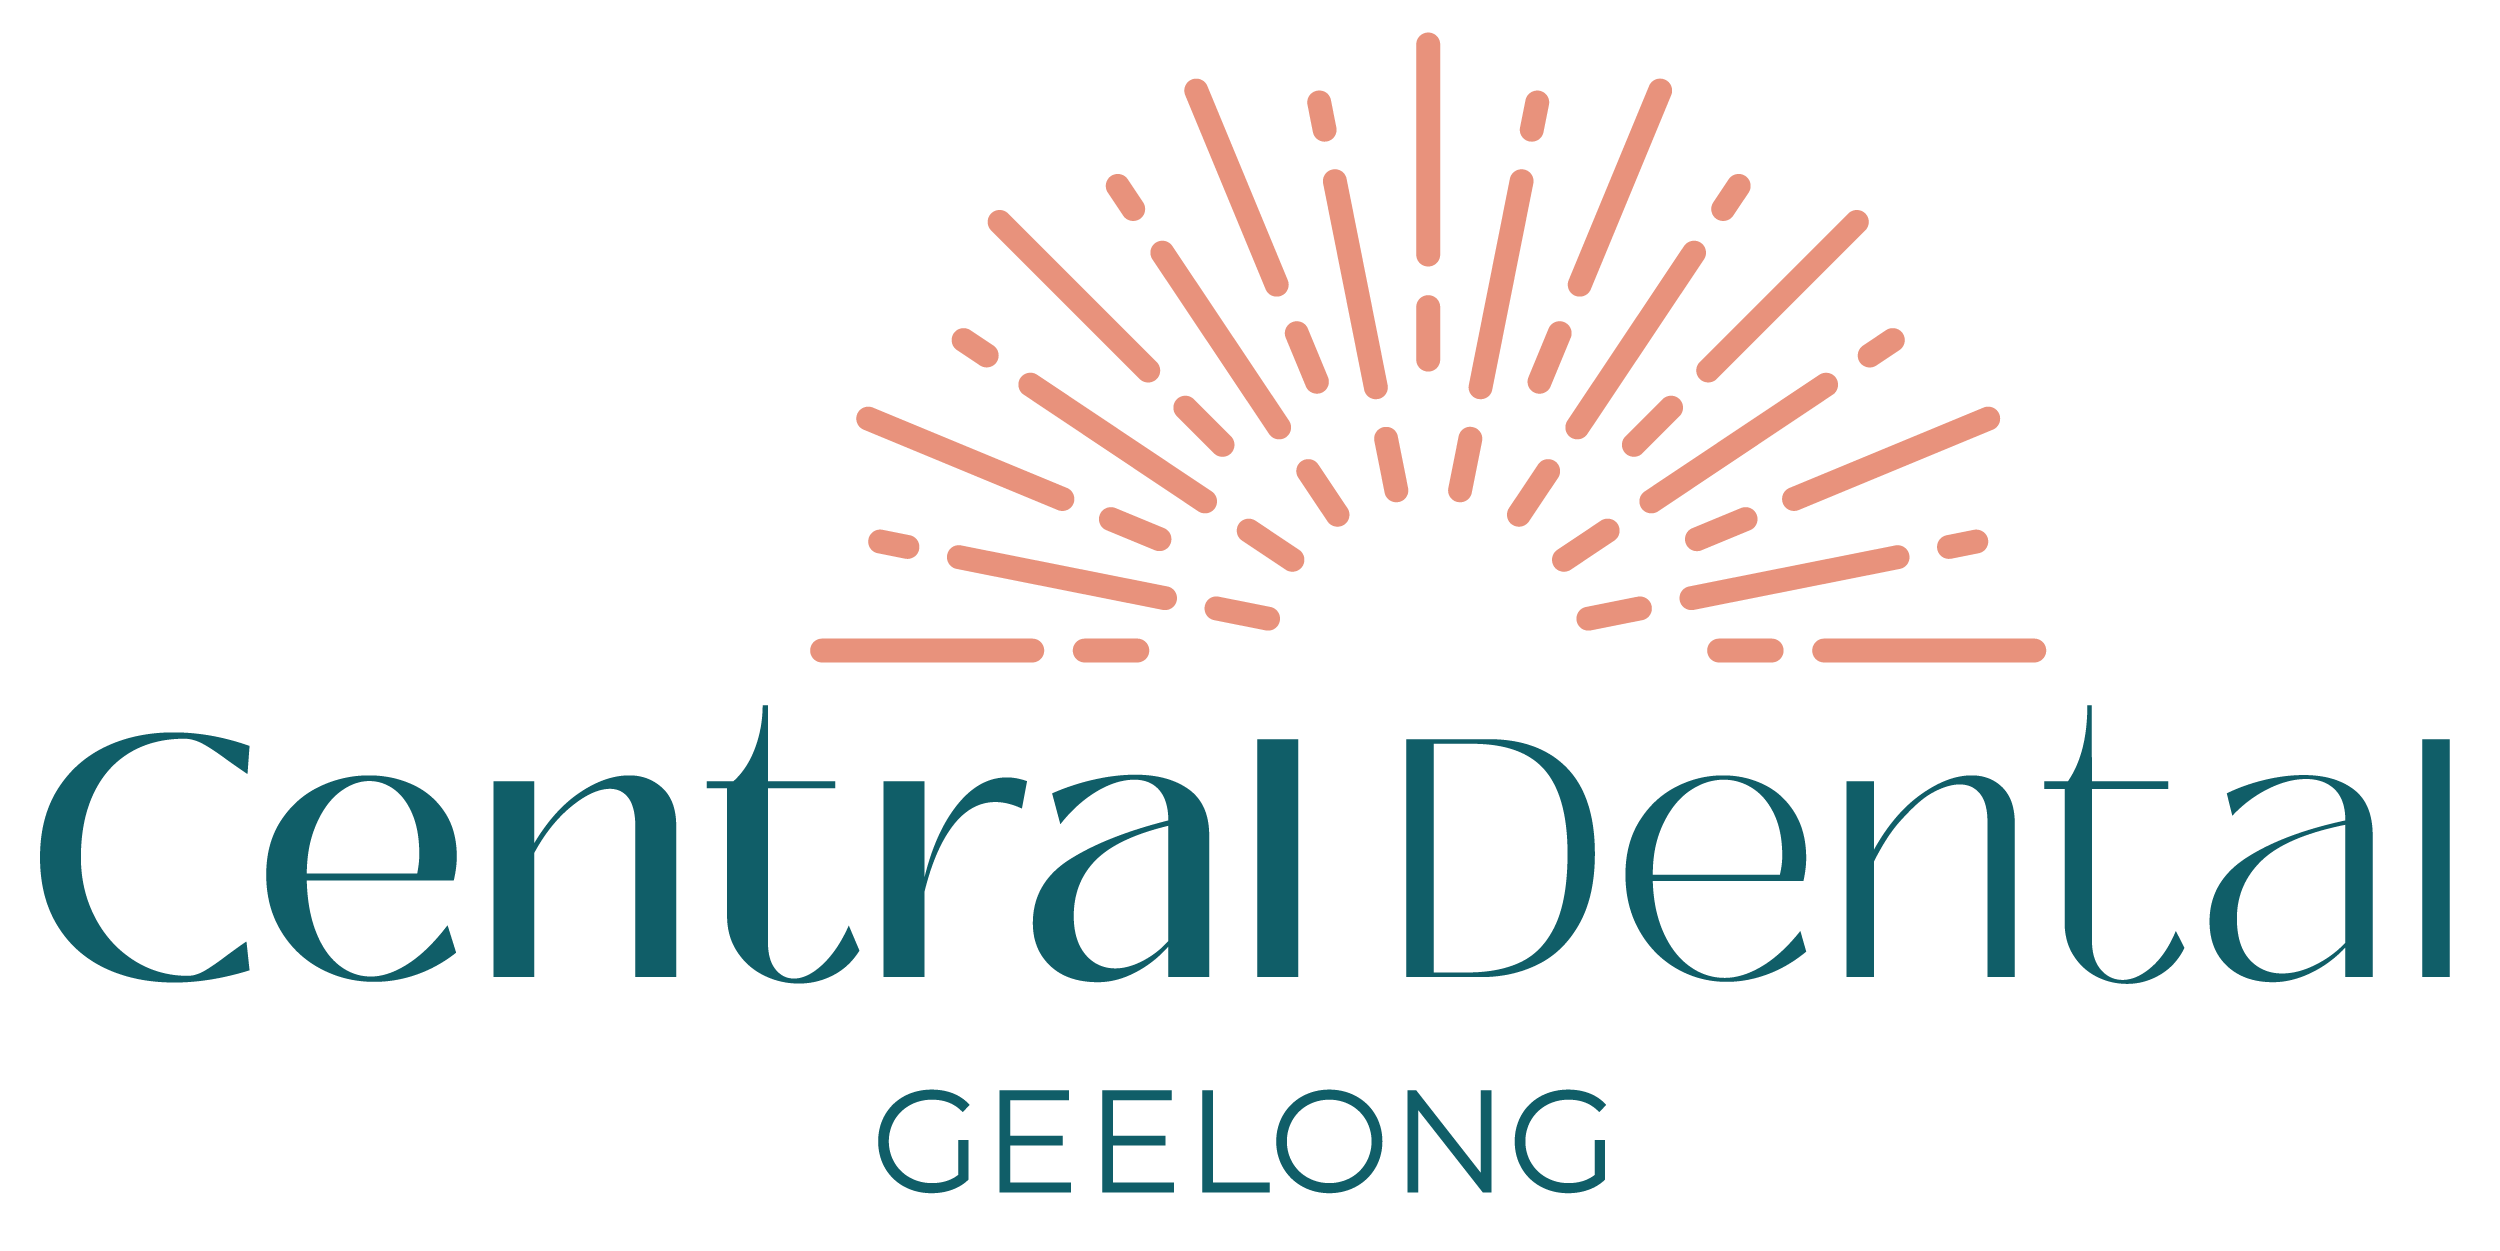 Central Dental Geelong